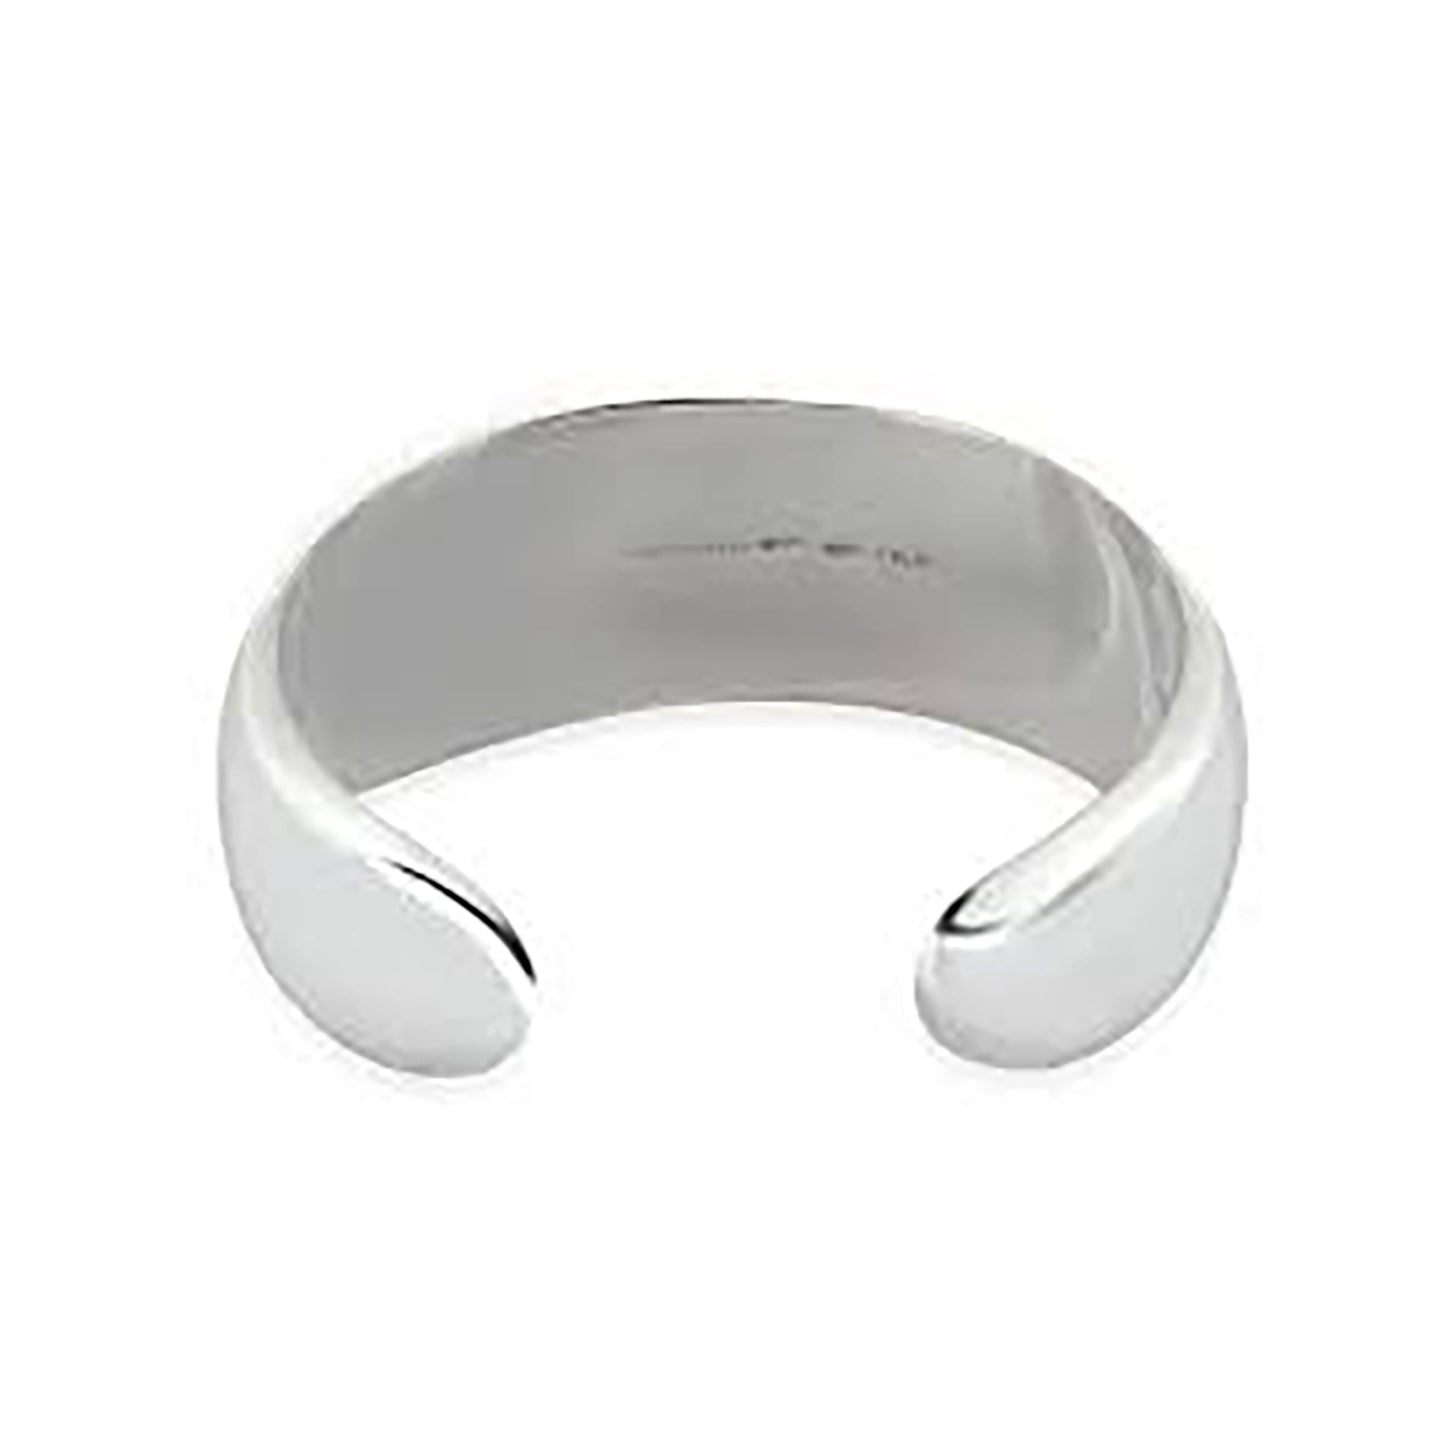 Tiffany and Co. Silver Cuff Dome Bracelet